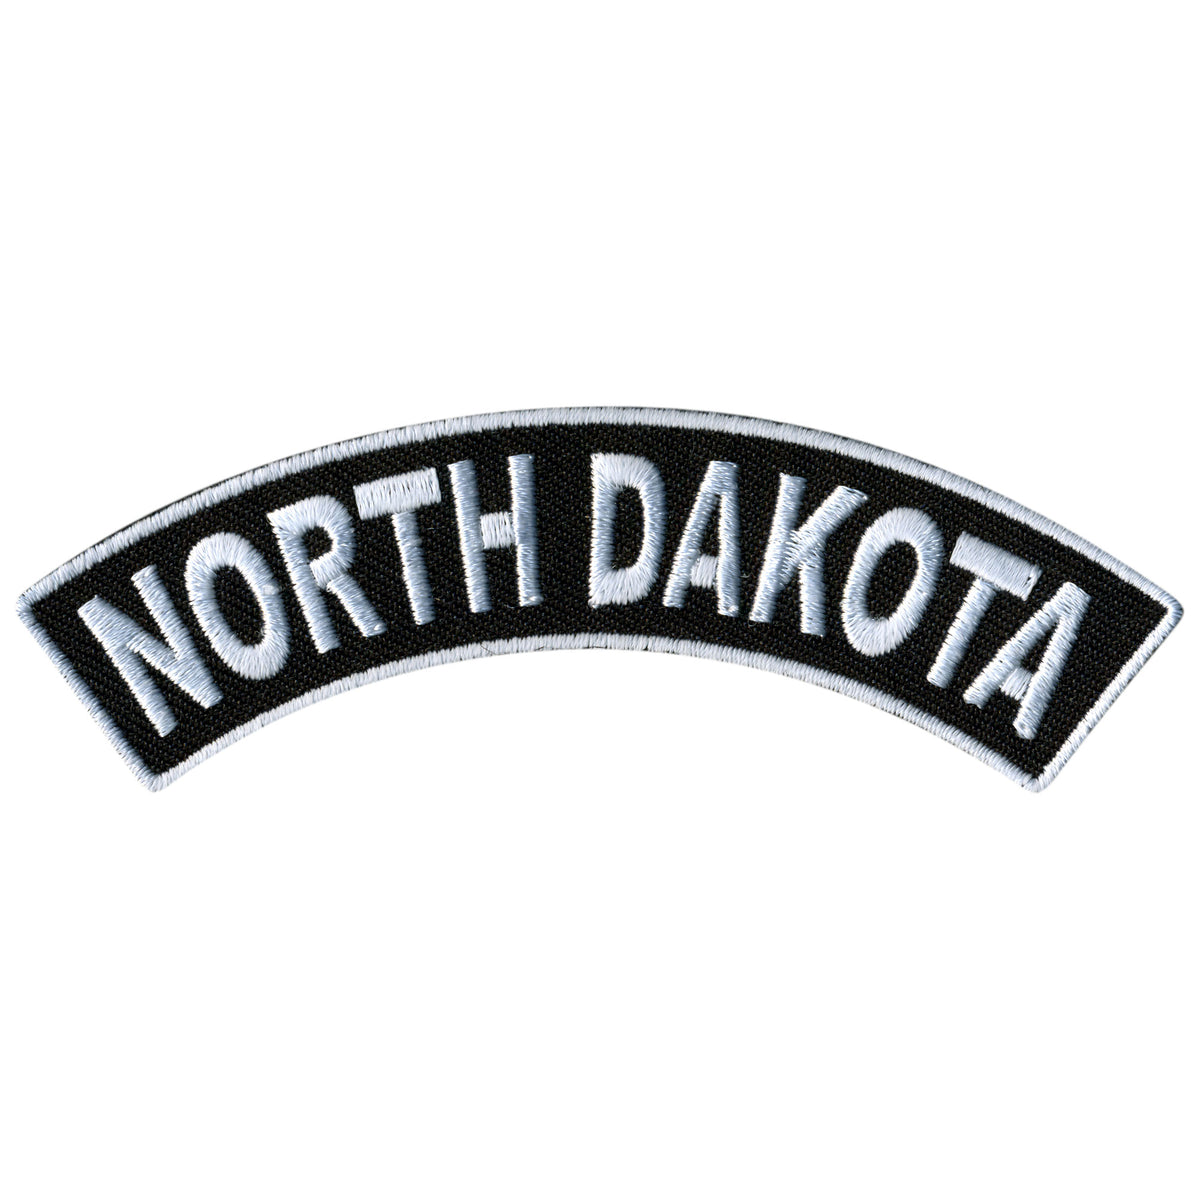 Hot Leathers North Dakota 4” X 1” Top Rocker Patch